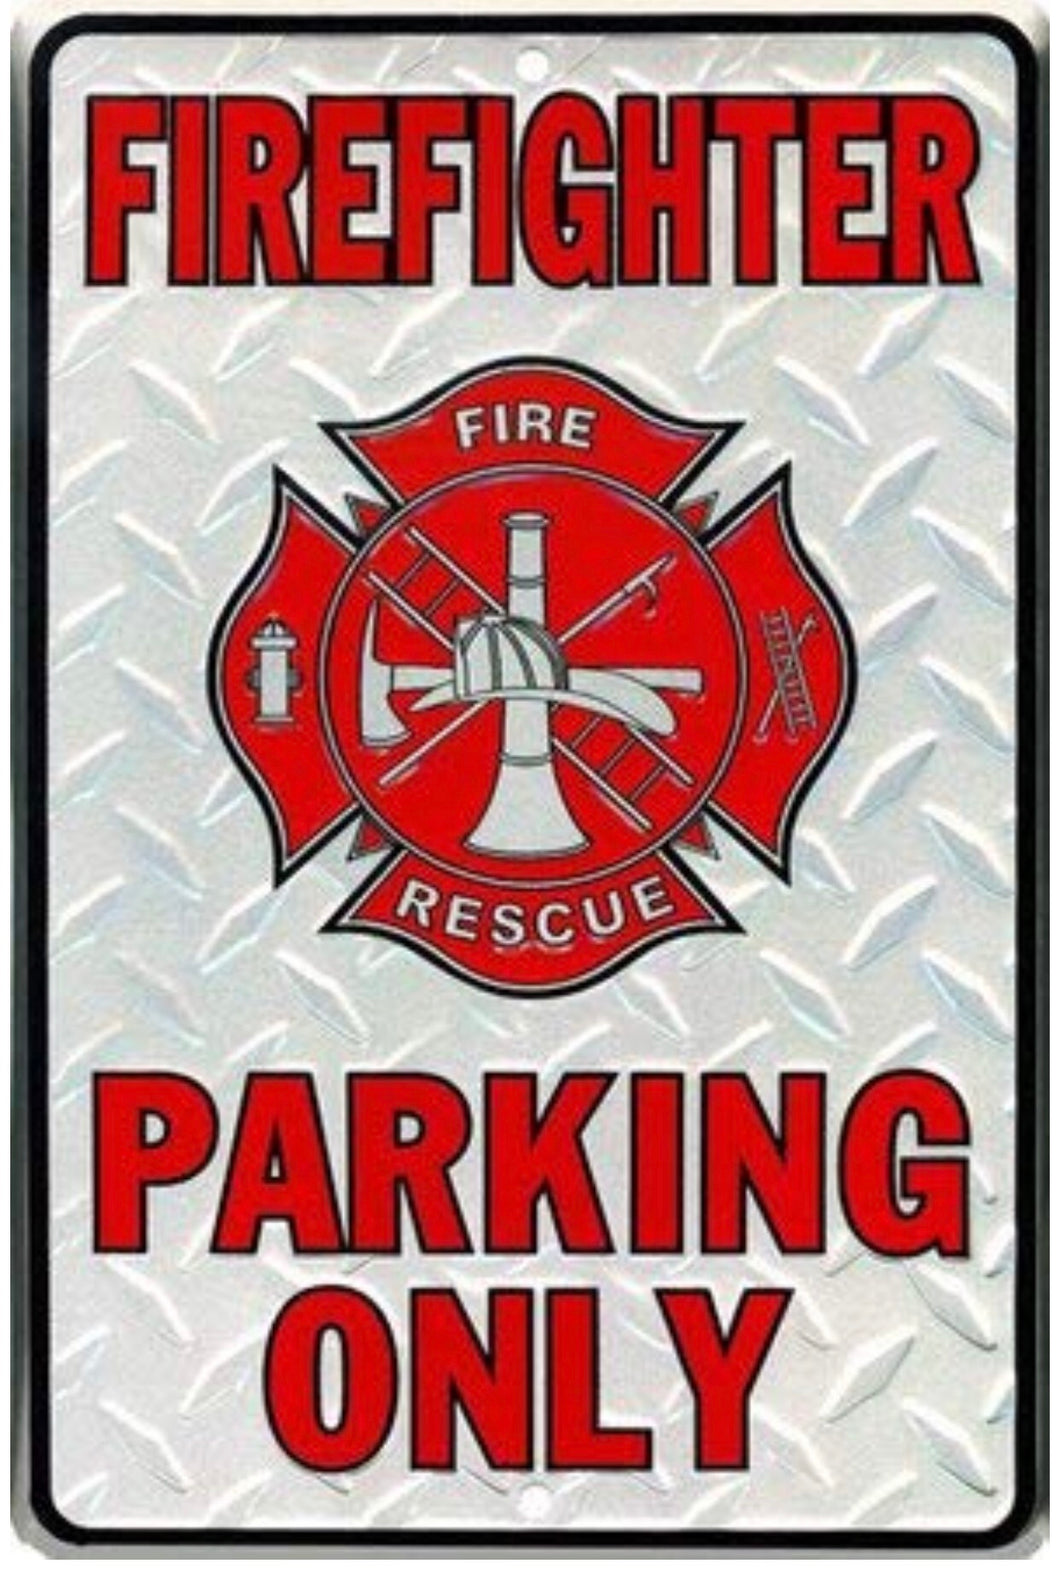 Firefighter Parking Only Metal Novelty Parking Sign 8